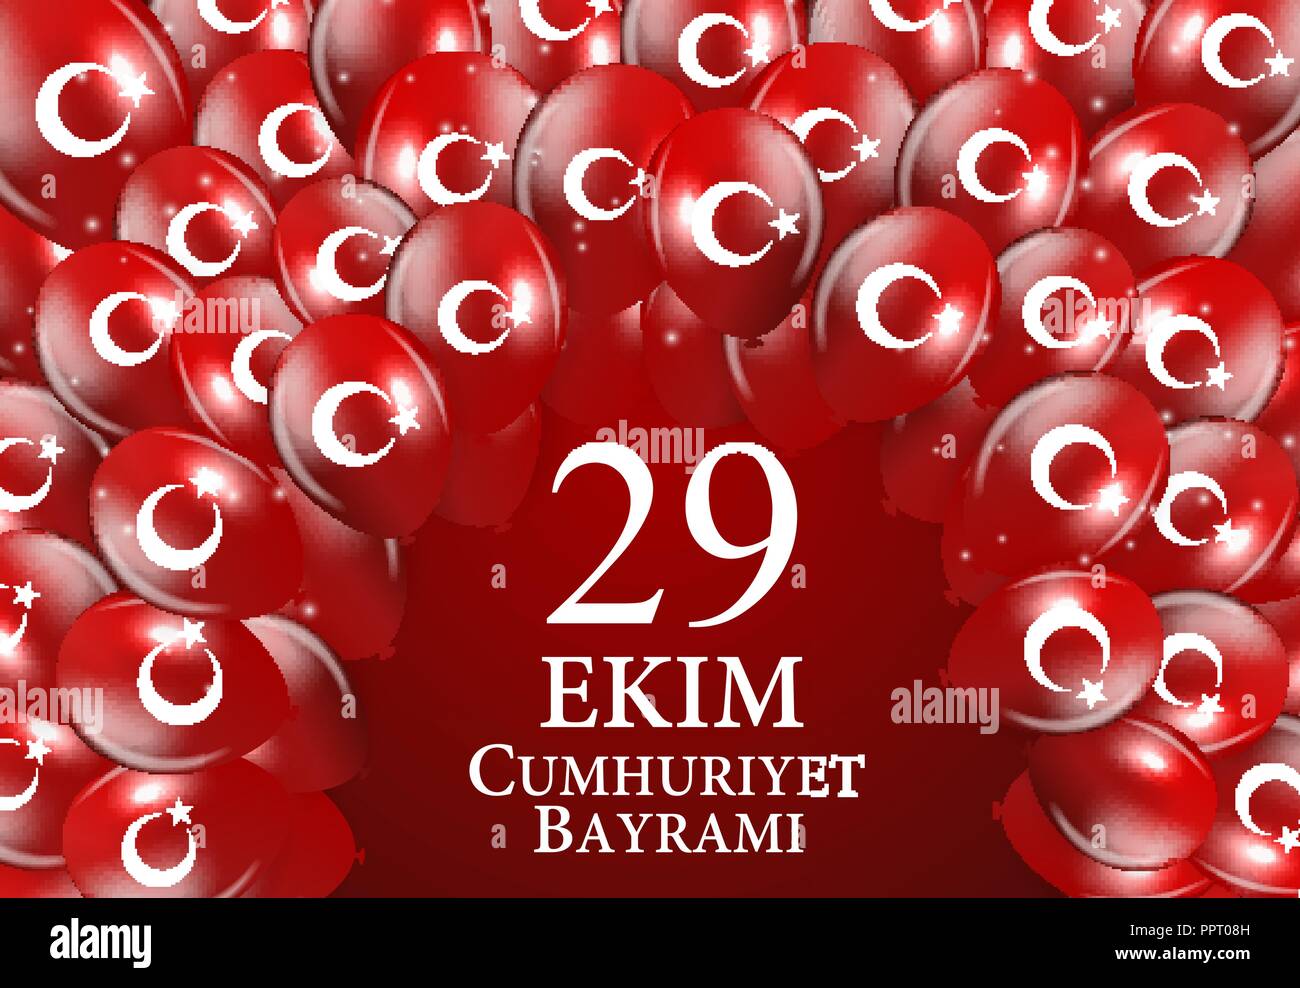 29 Ekim Cumhuriyet Bayraminiz. Translation: 29 october Republic Day Turkey. Vector Illustration Stock Vector